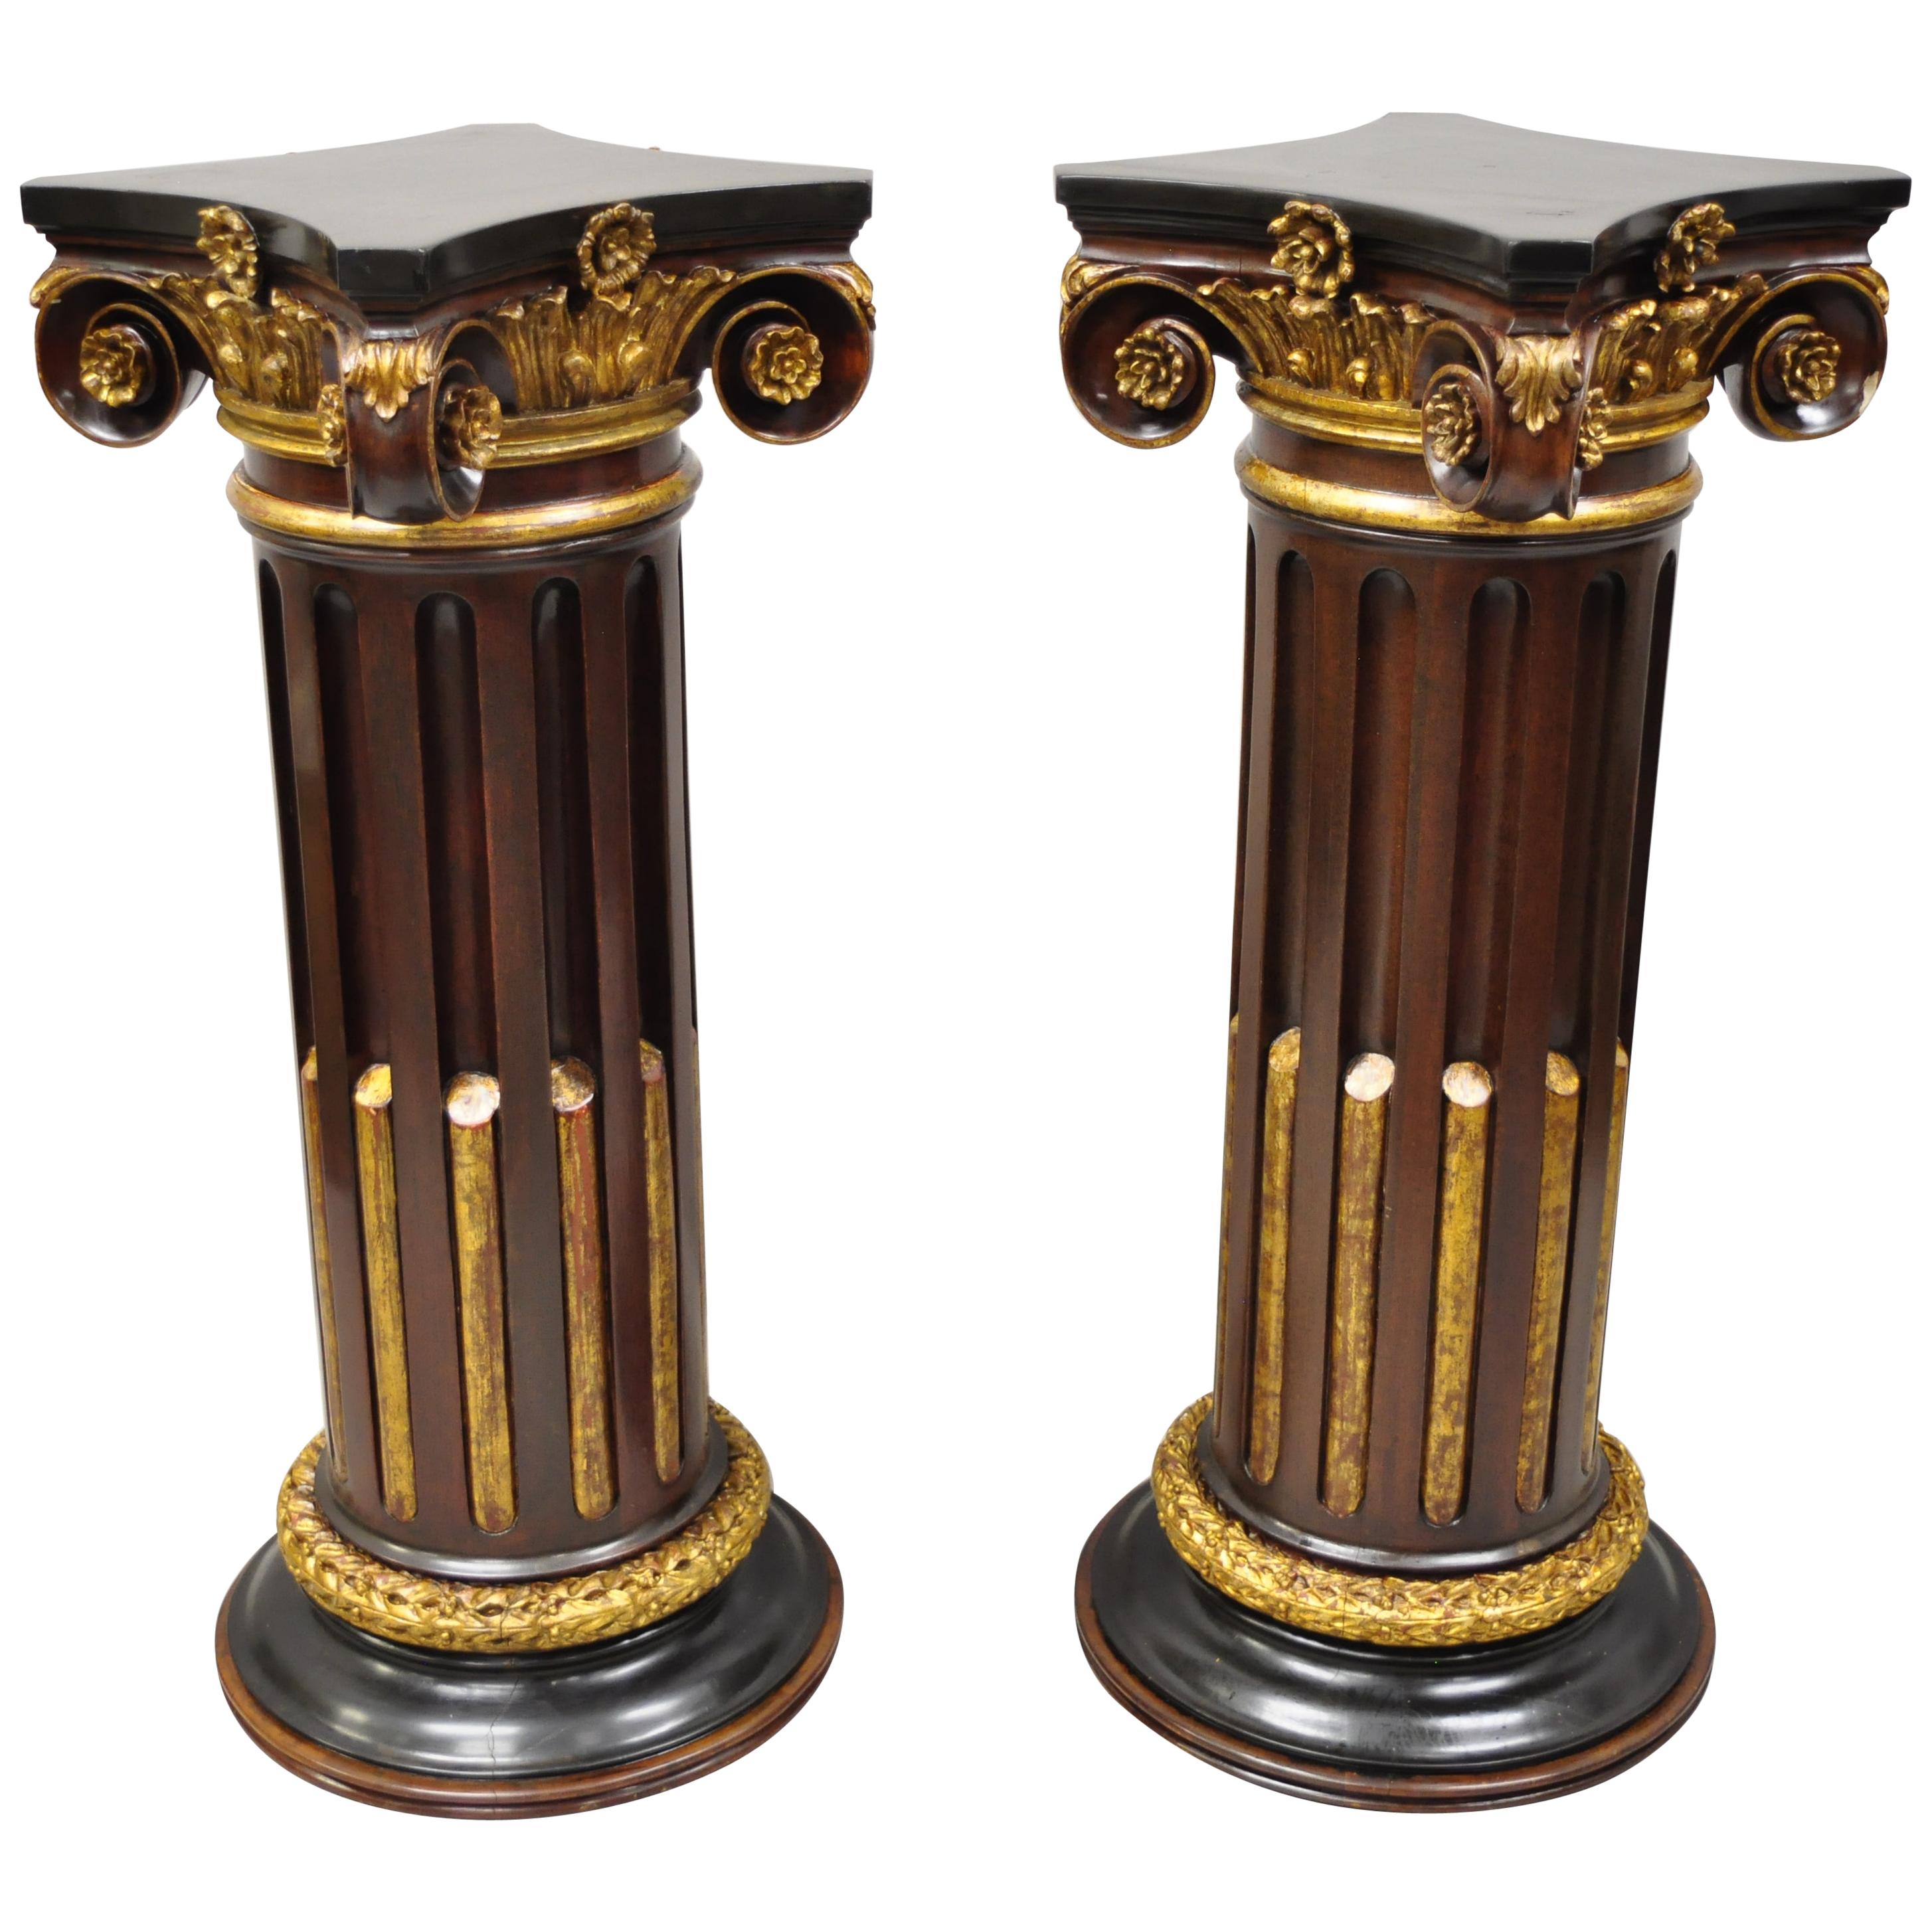 Italian Classical Carved Polychrome Gold Gilt Corinthian Column Pedestals, Pair